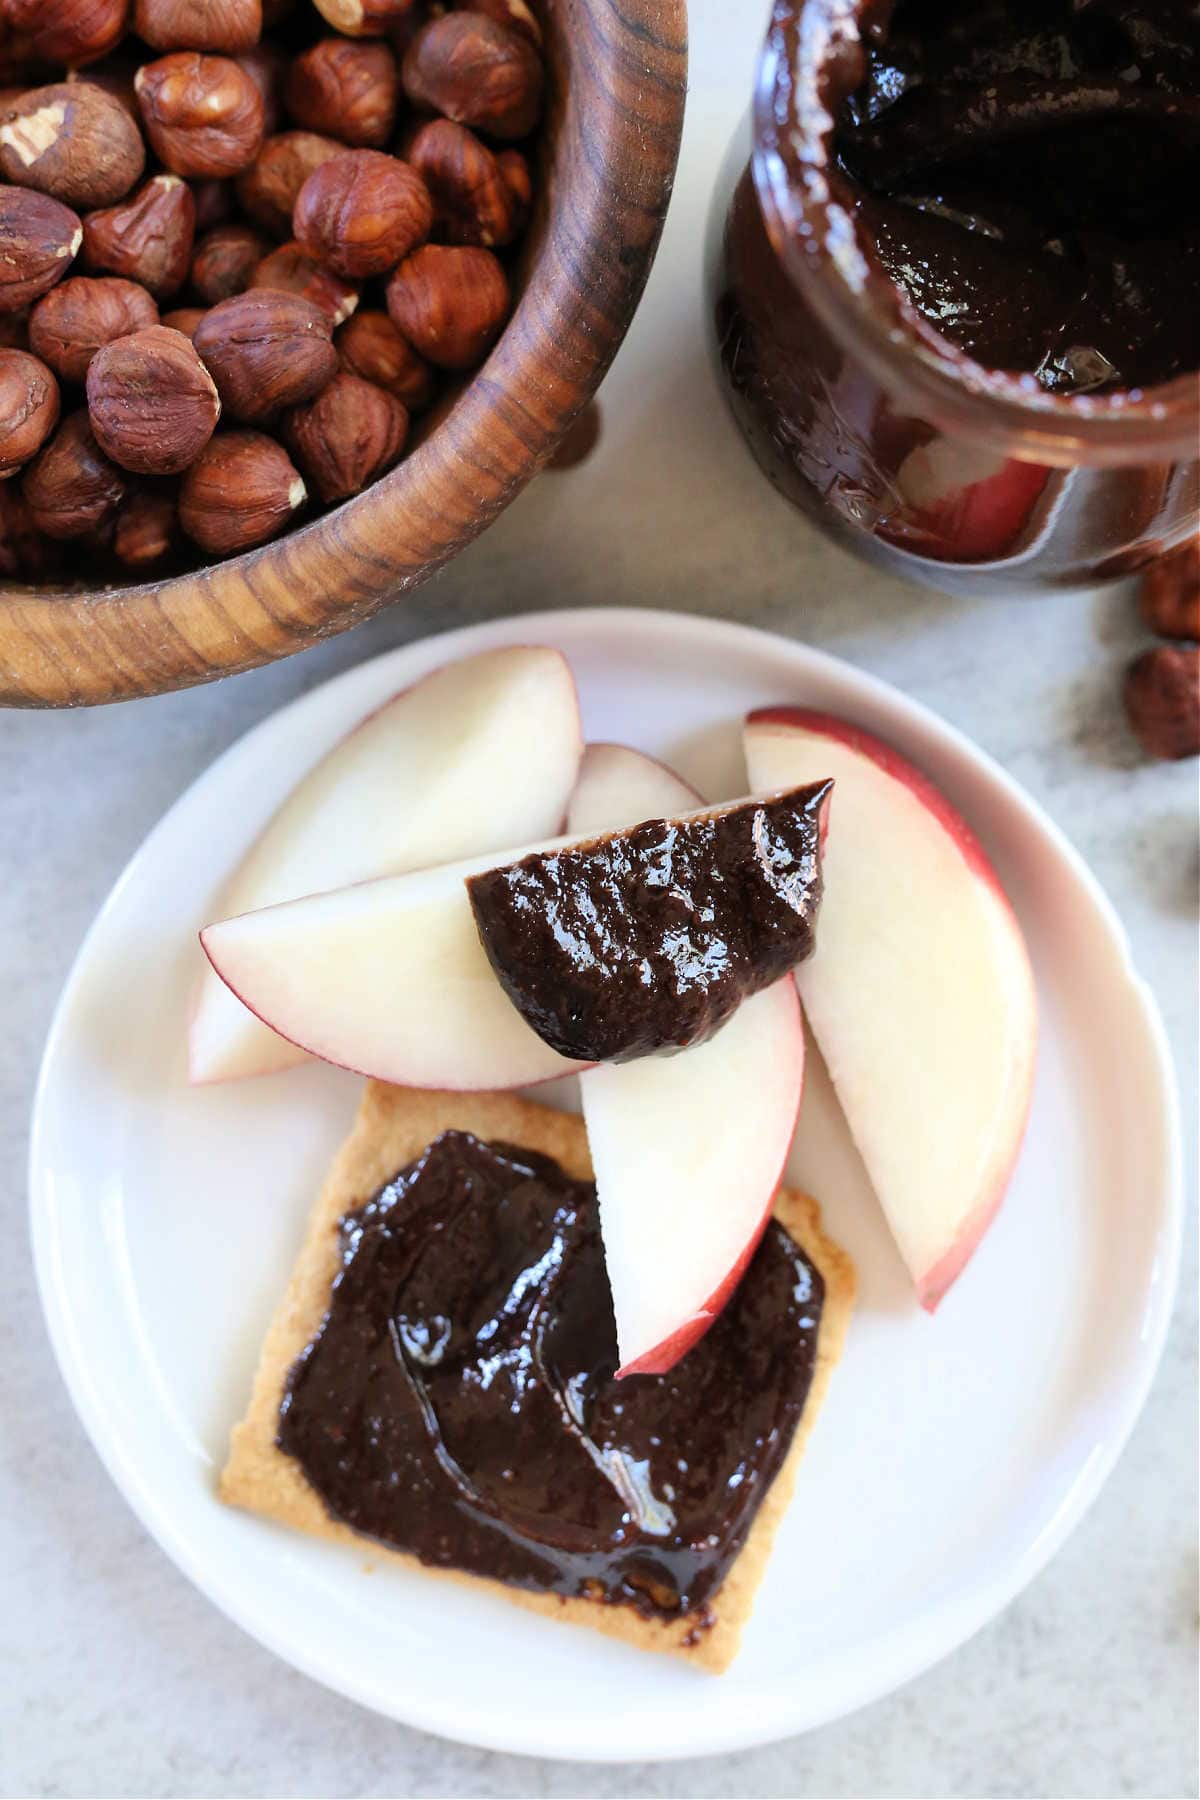 chocolate hazelnut spread on a graham cracker and fruit